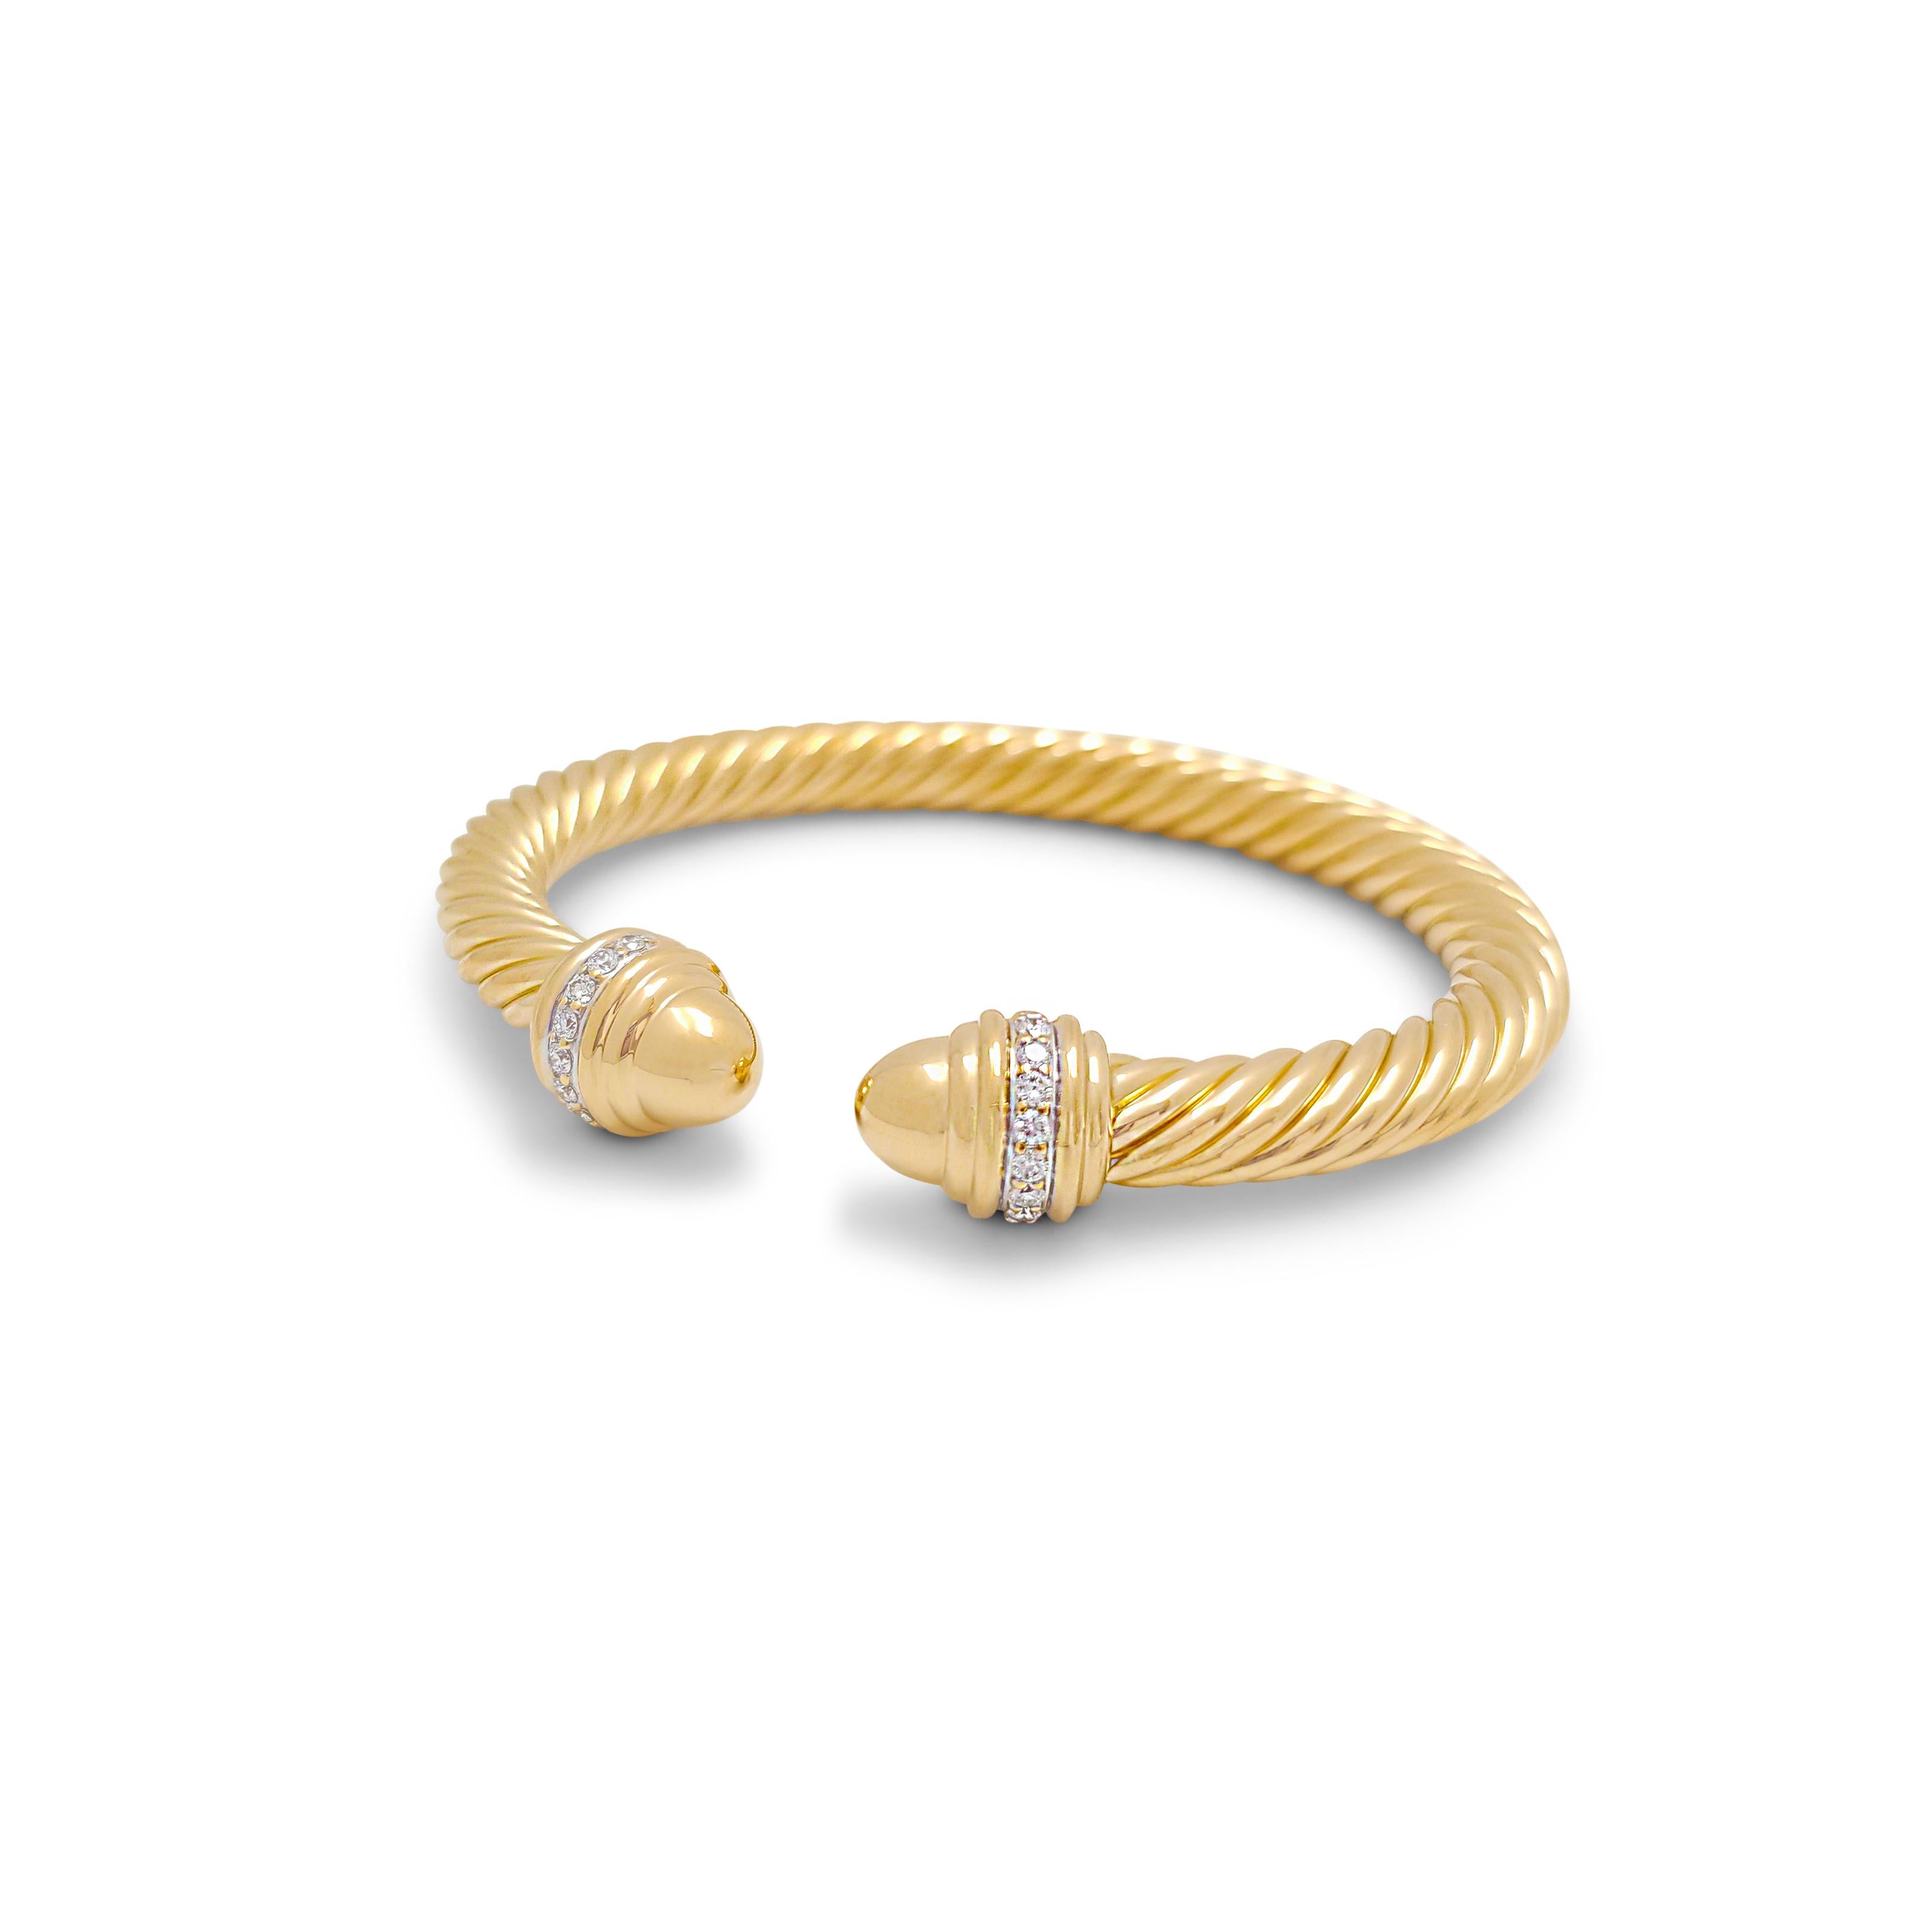 Contemporary David Yurman 'Cable Classics' Yellow Gold and Diamond Bracelet